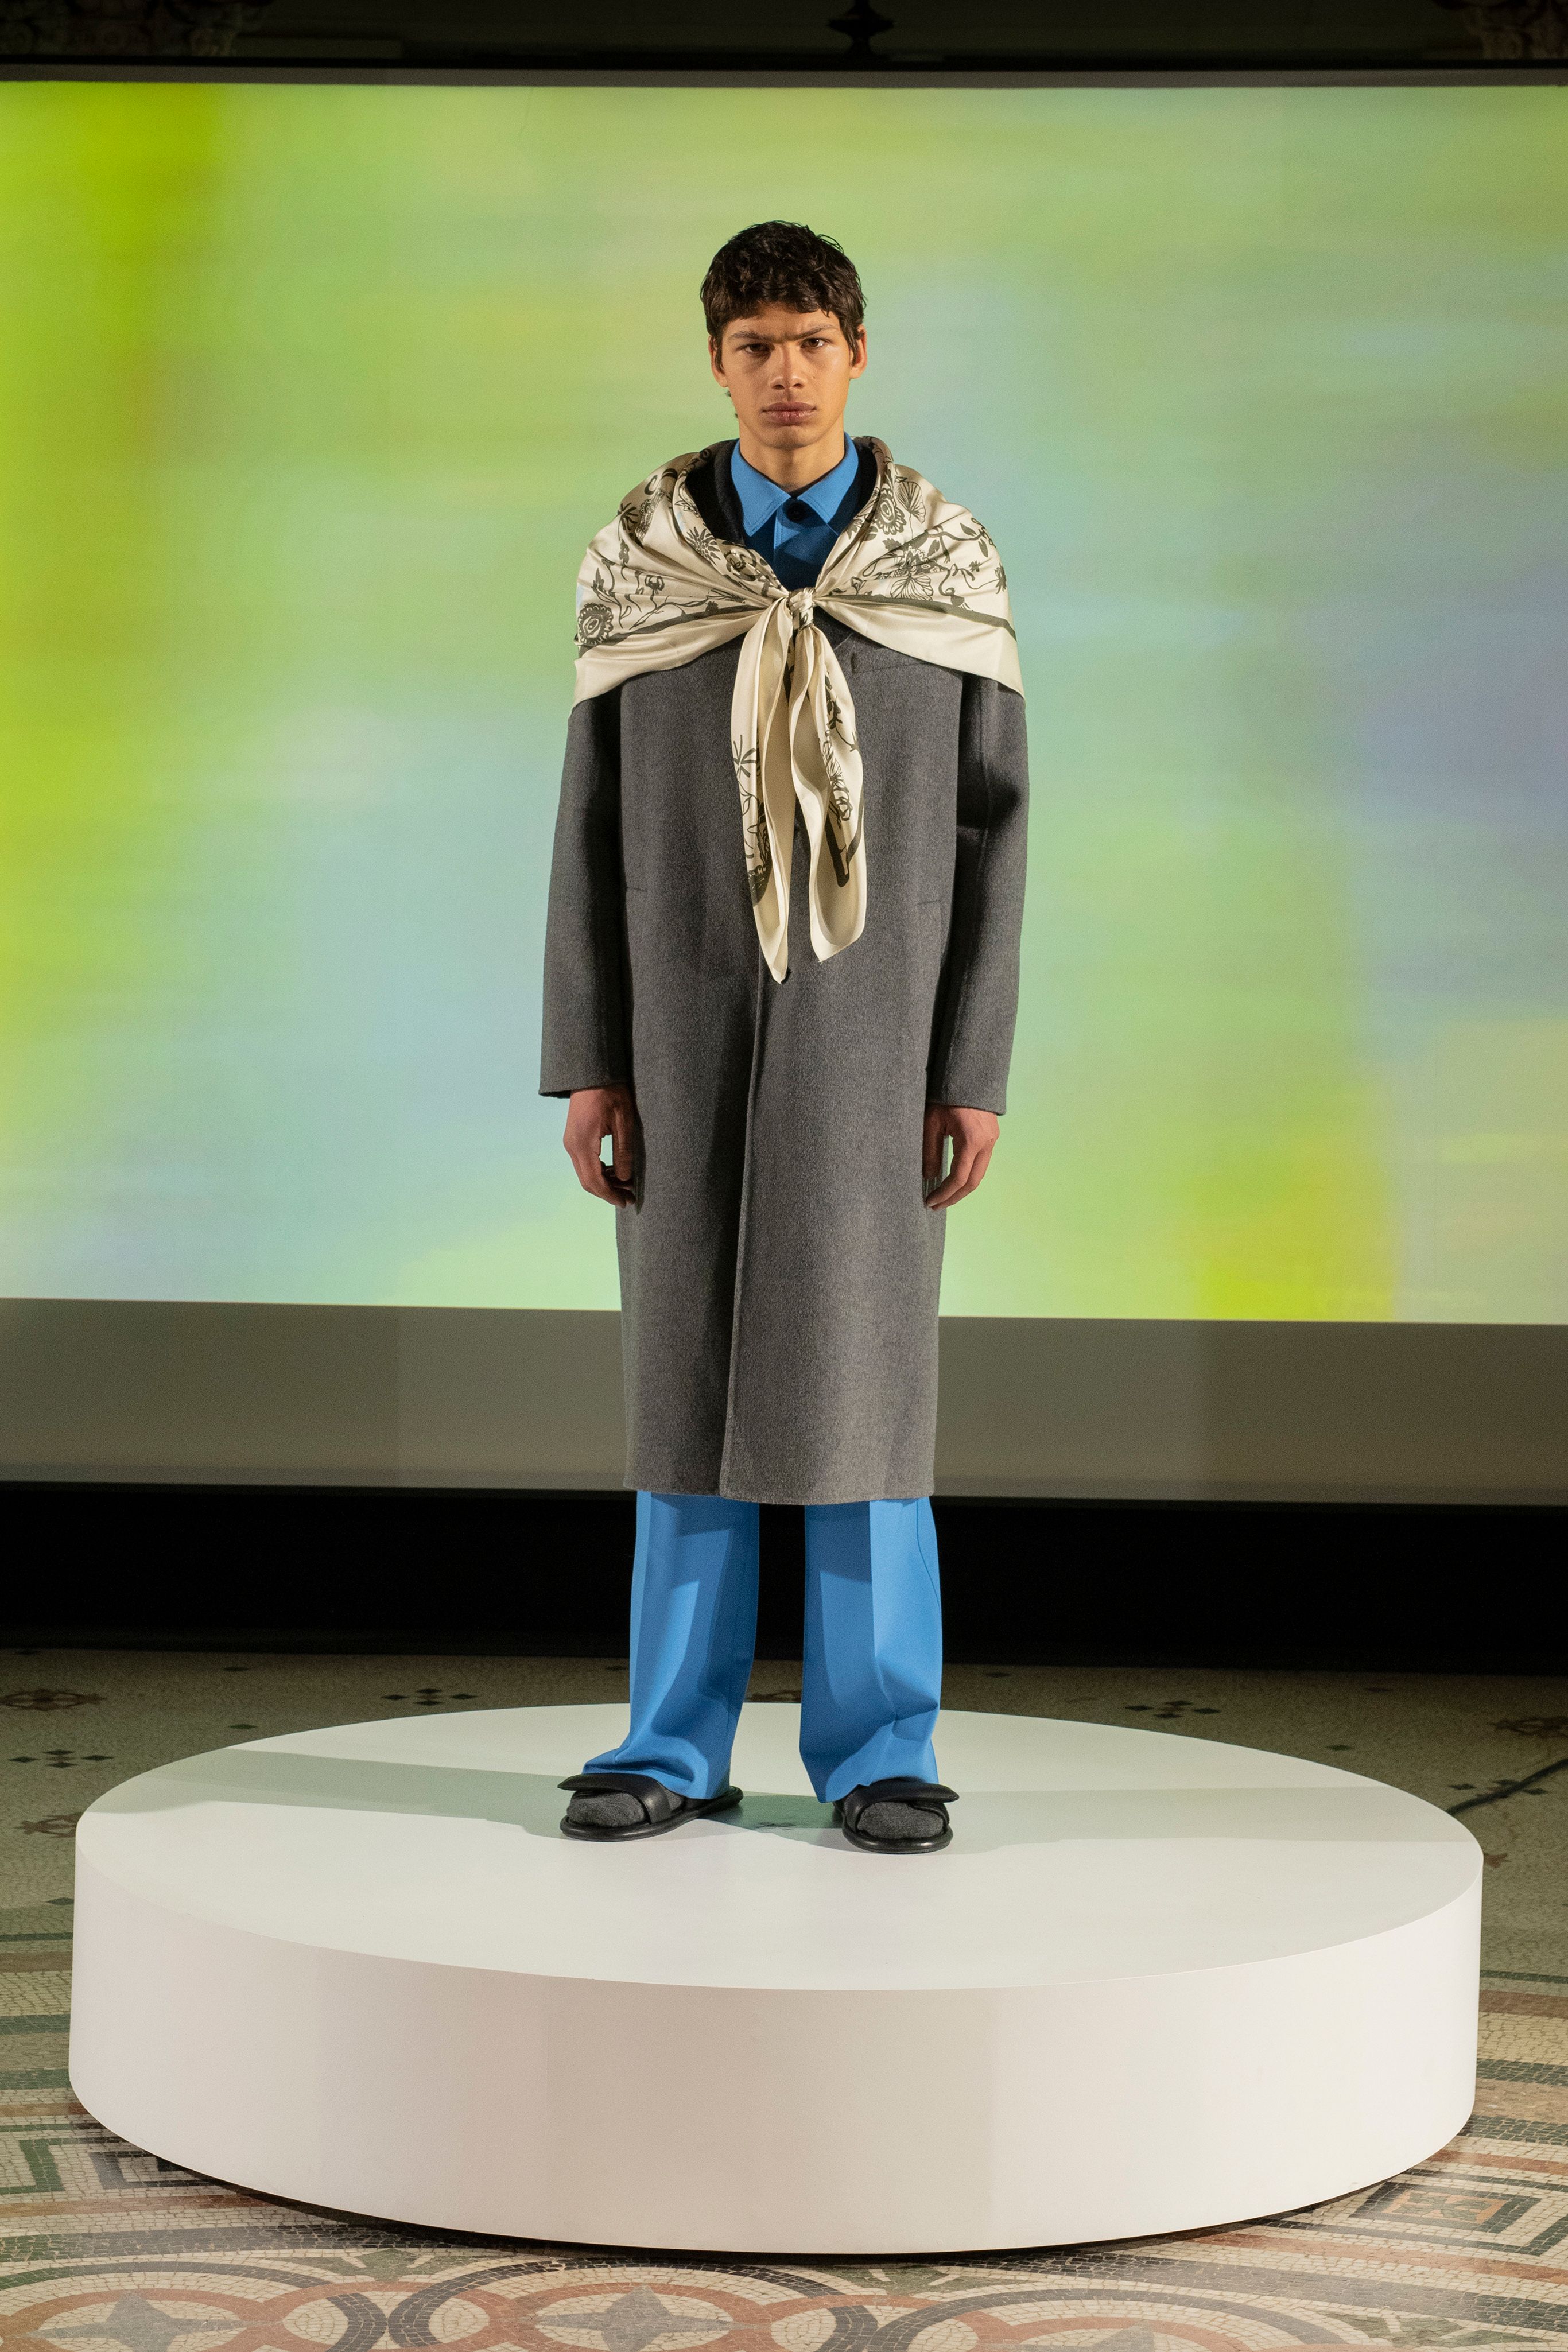 Fashion doesn't matter now': Balenciaga pays tribute to Ukraine's refugees, Paris fashion week